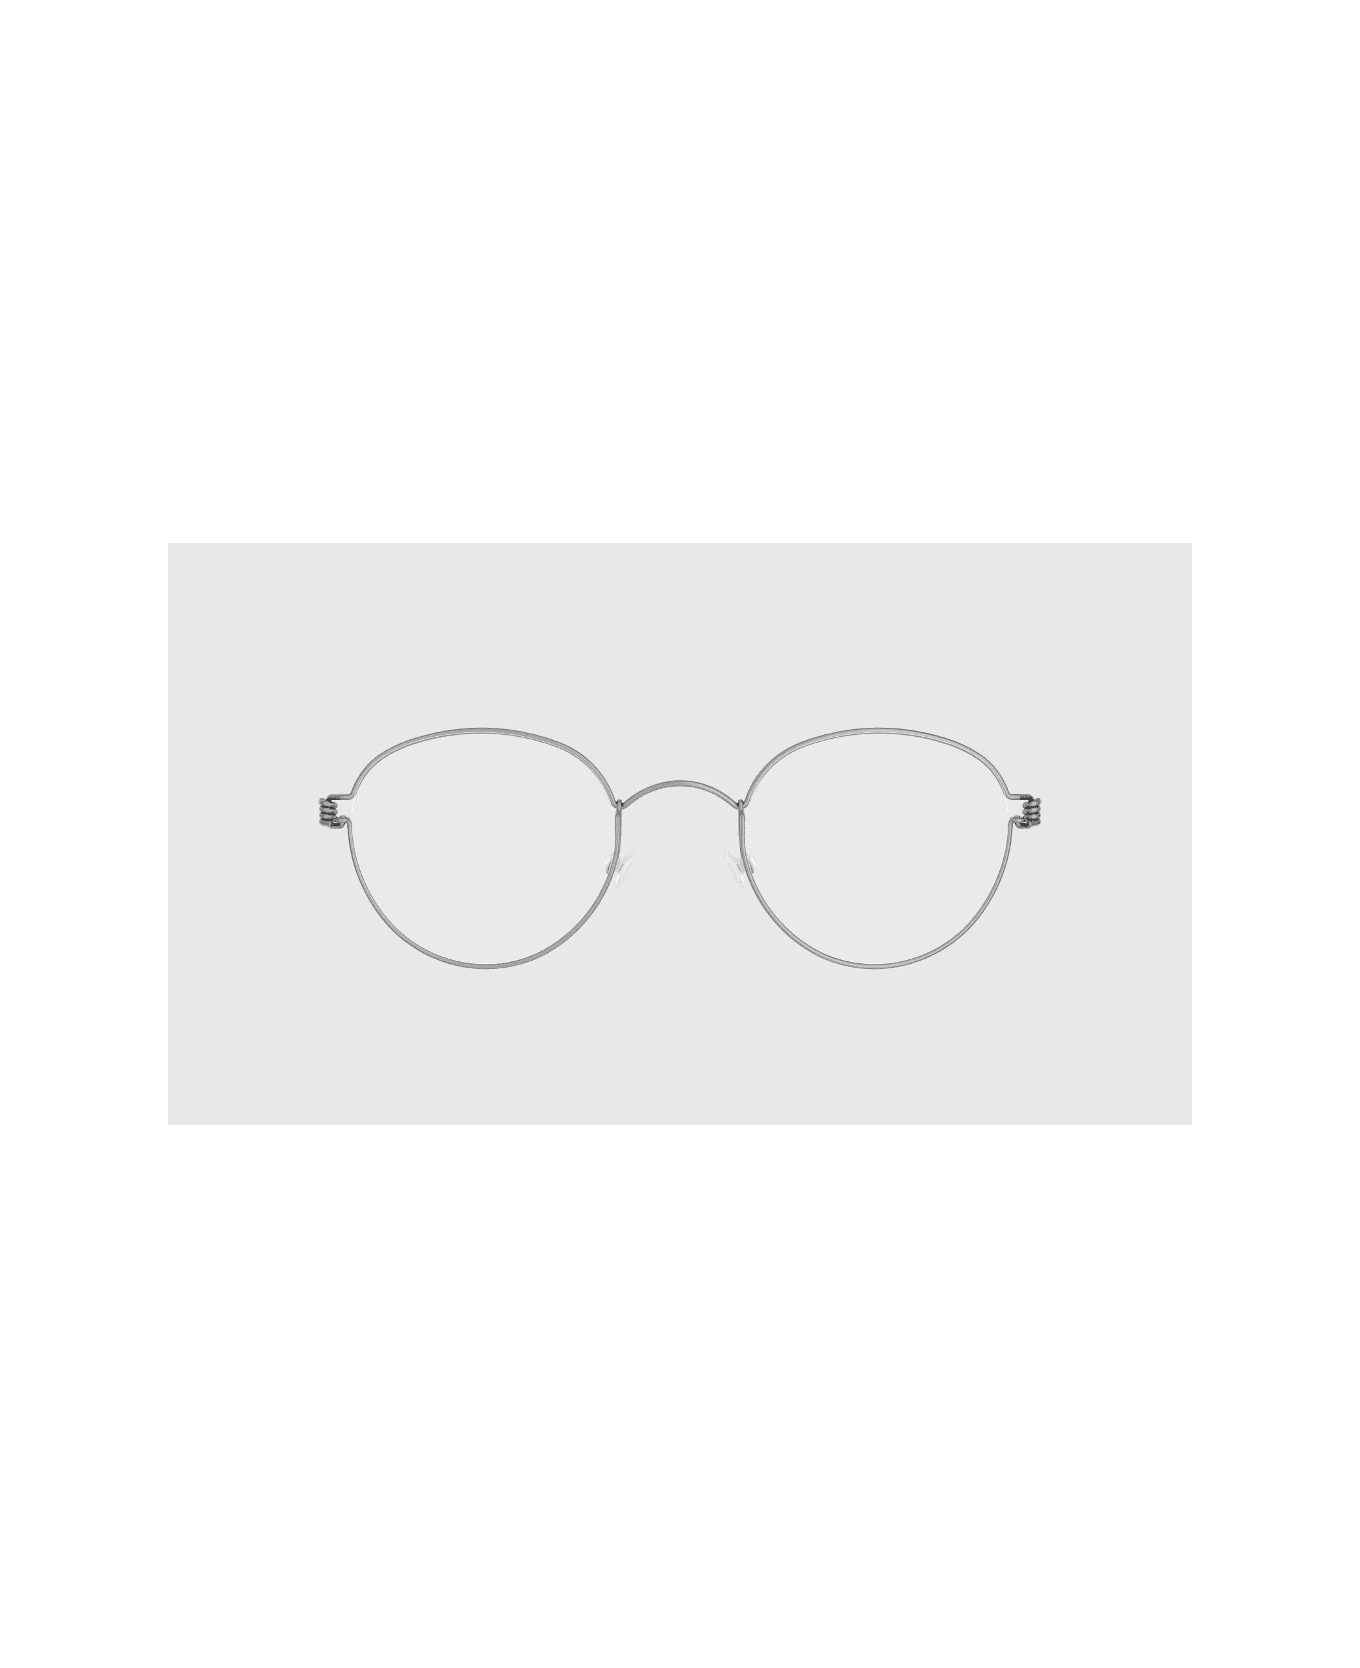 LINDBERG Rim Bo 4910 Glasses - Silver アイウェア